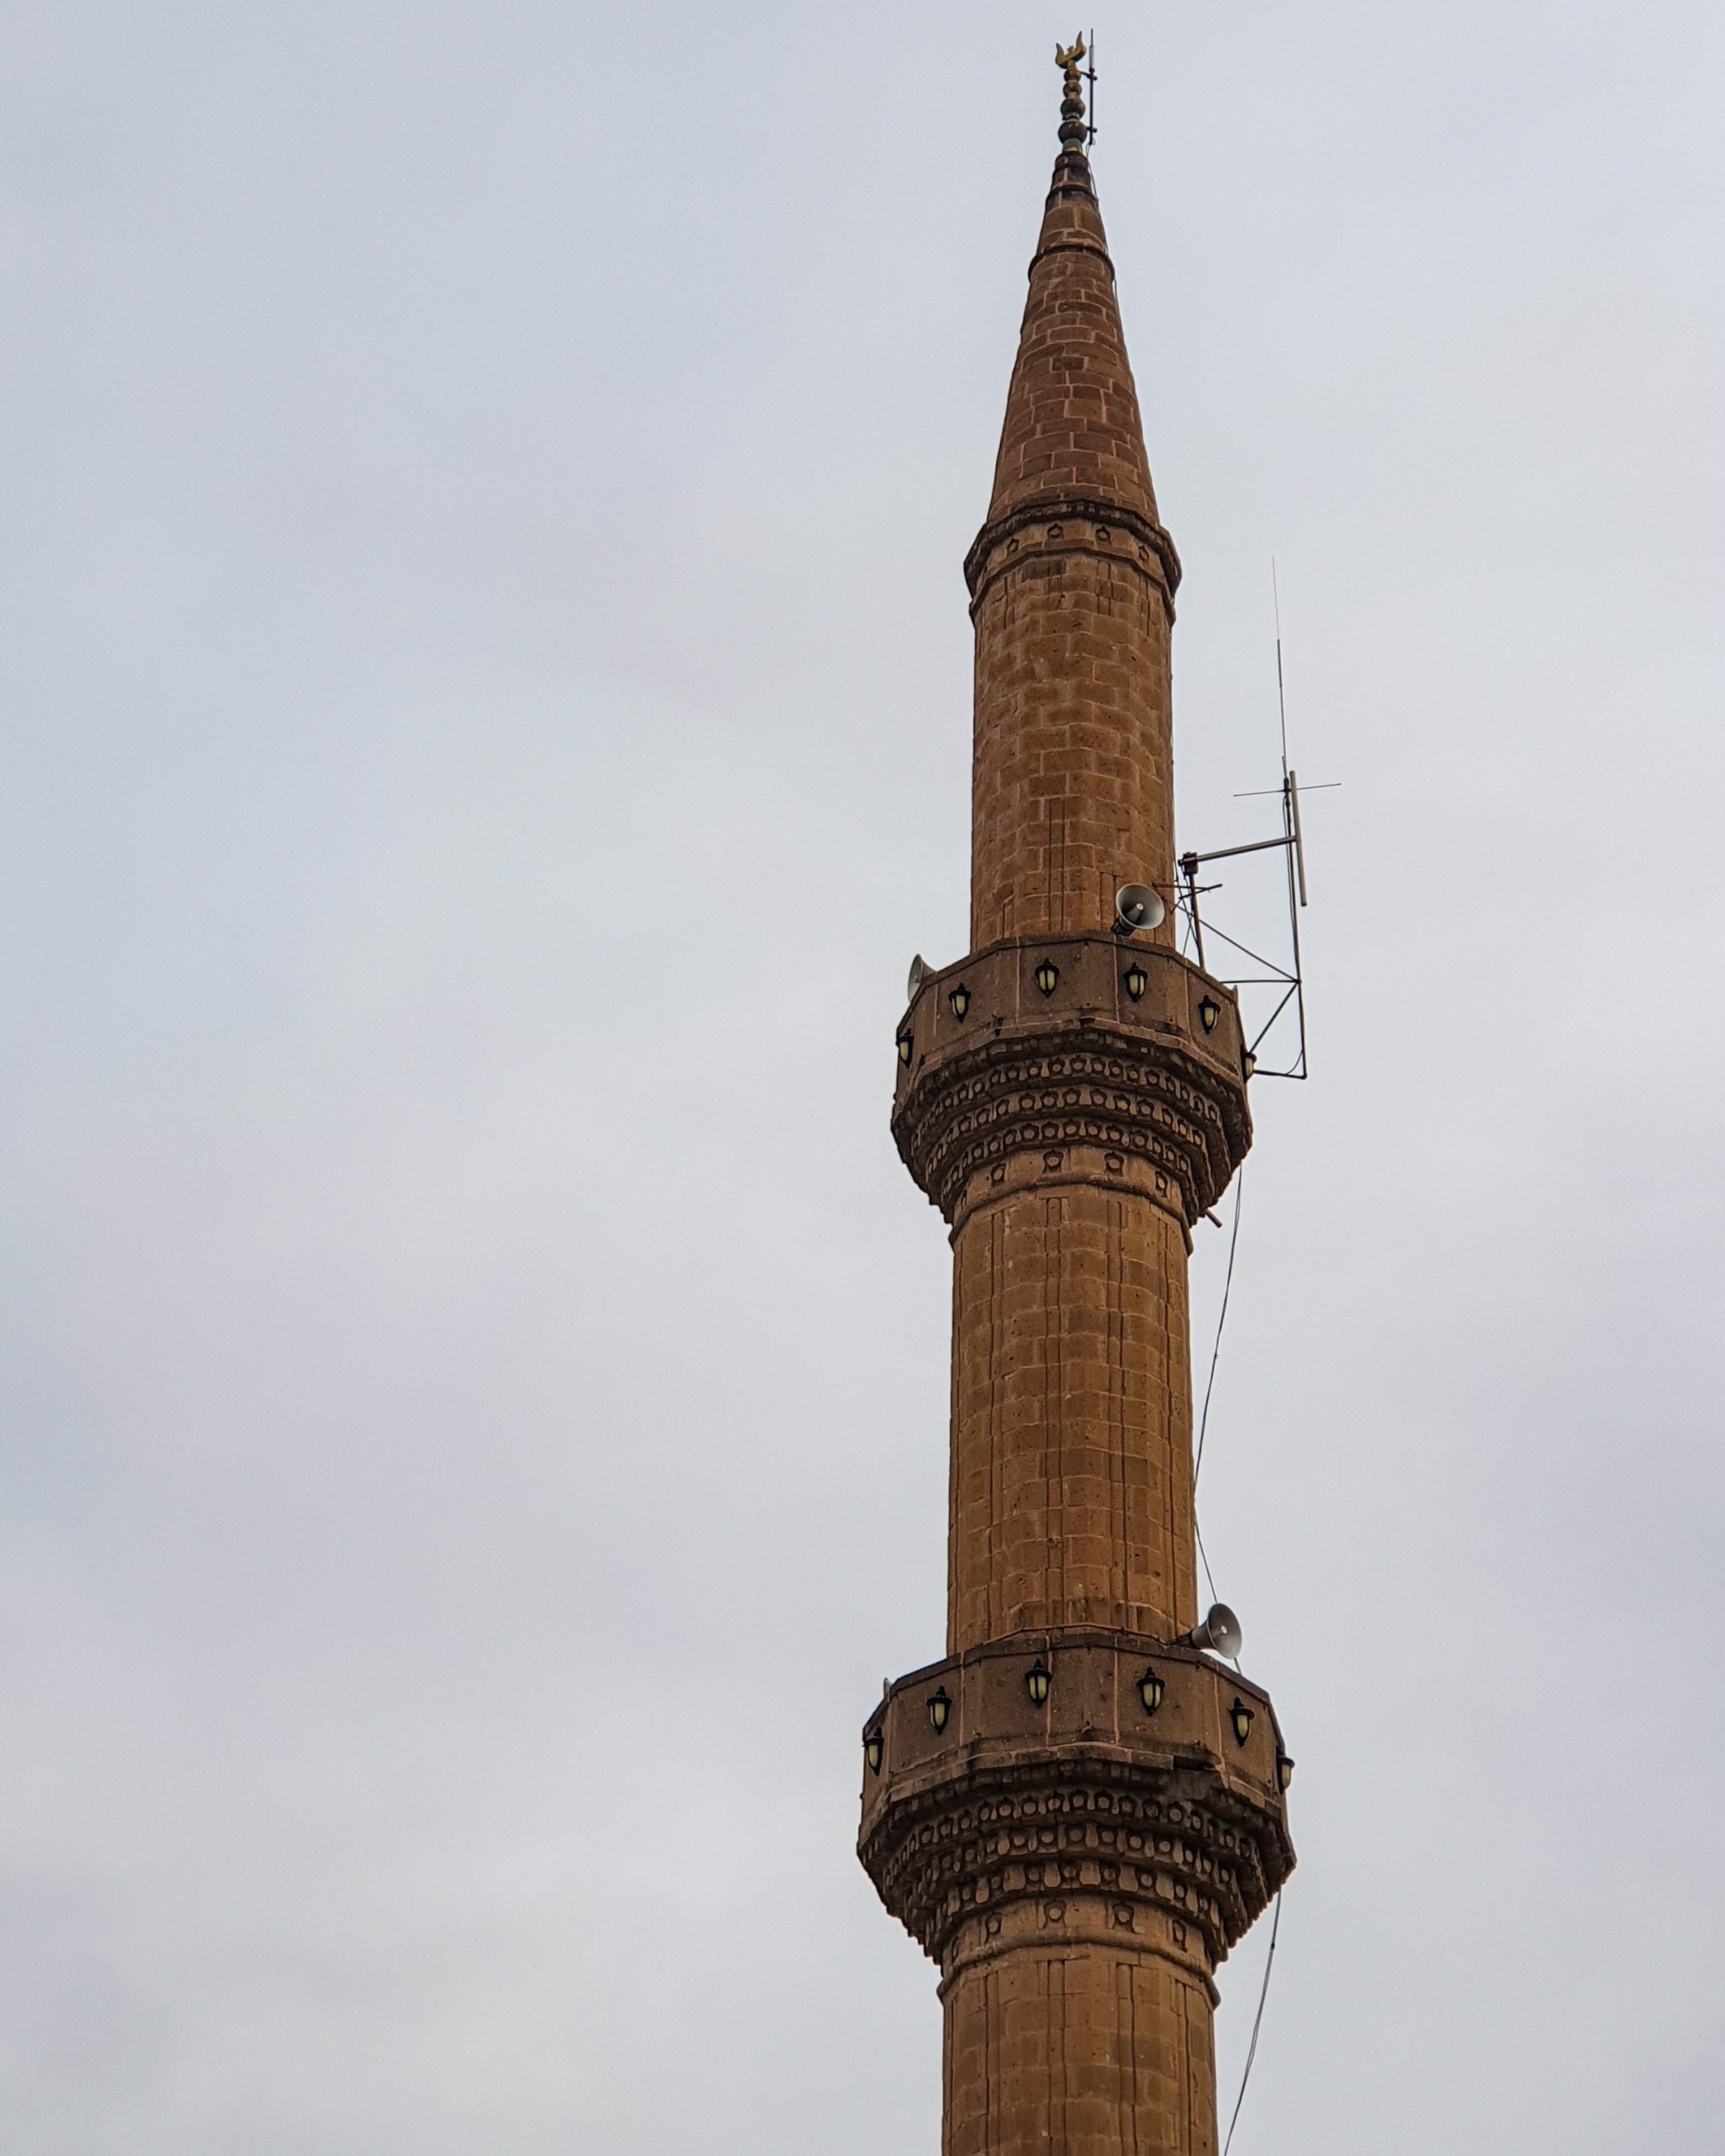 The minaret of Aksaray Grand Mosque, built in 1925. (Photo by Argun Konuk)